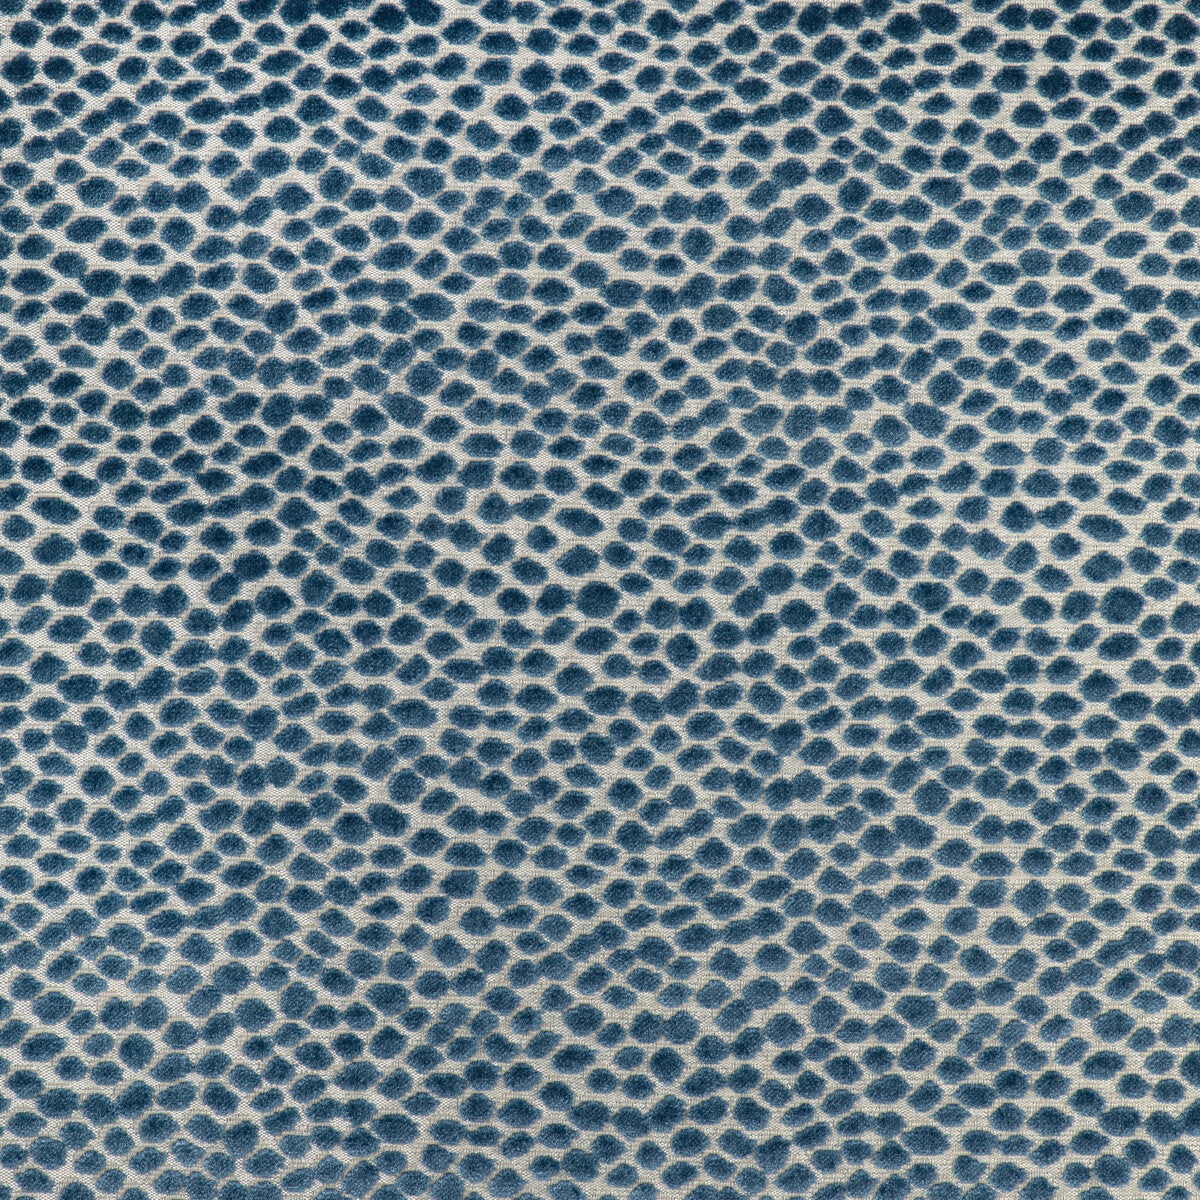 Kravet Design fabric in 37087-51 color - pattern 37087.51.0 - by Kravet Design in the Modern Velvets collection